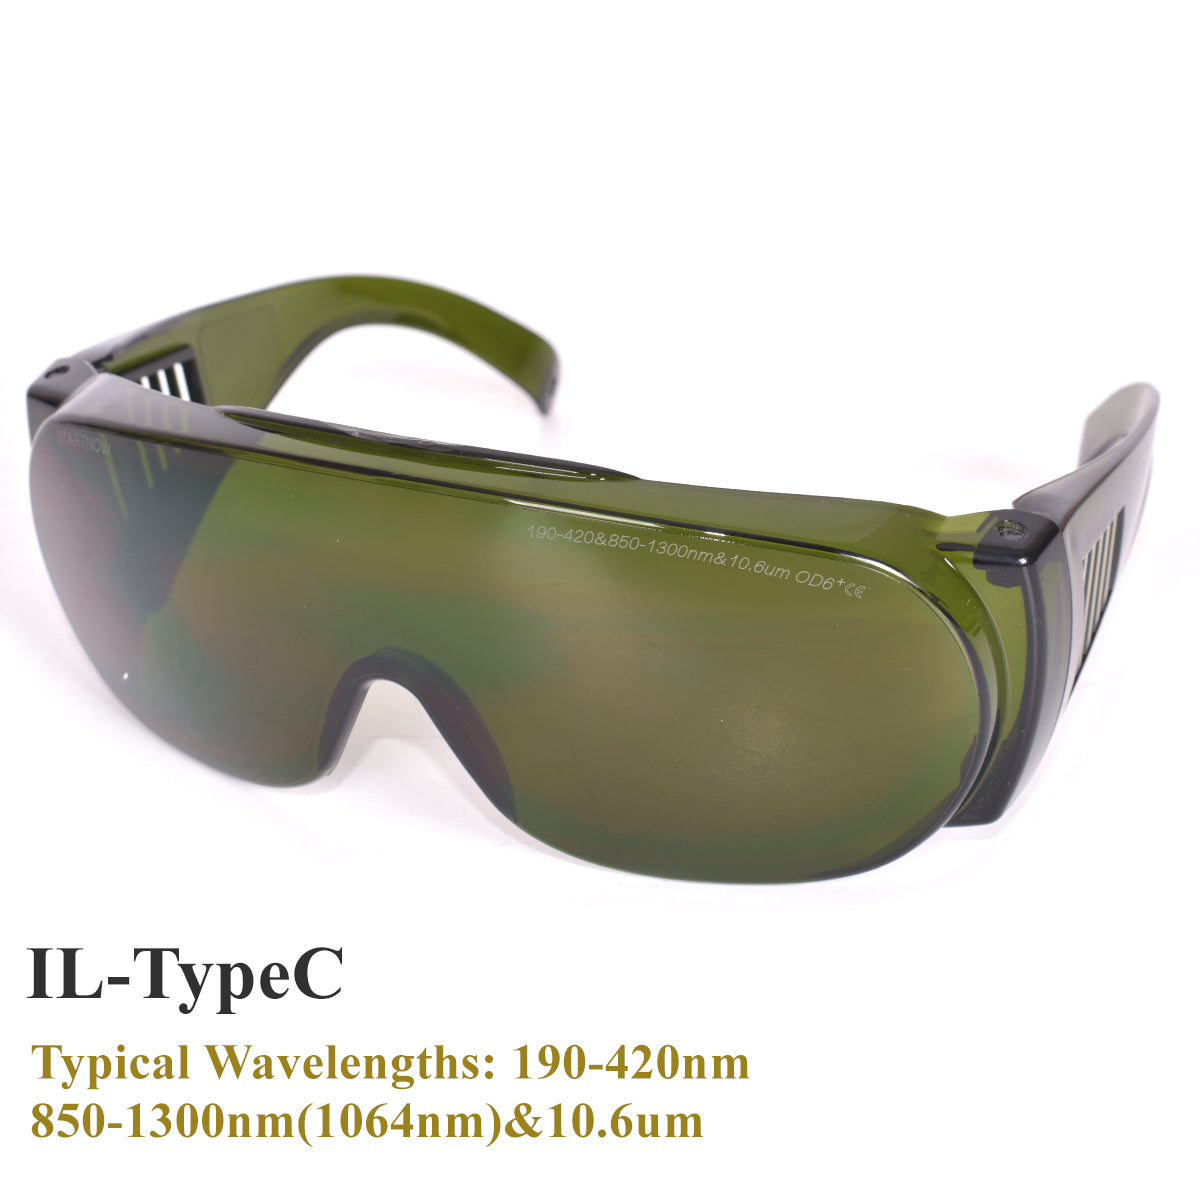 Startnow Laser Safety Goggles OD6+Fiber 1064nm 190-420nm 850-1300nm &10.6um CE OD4+ Protective Glasses For Marking Machine Shield Protection Eyewear